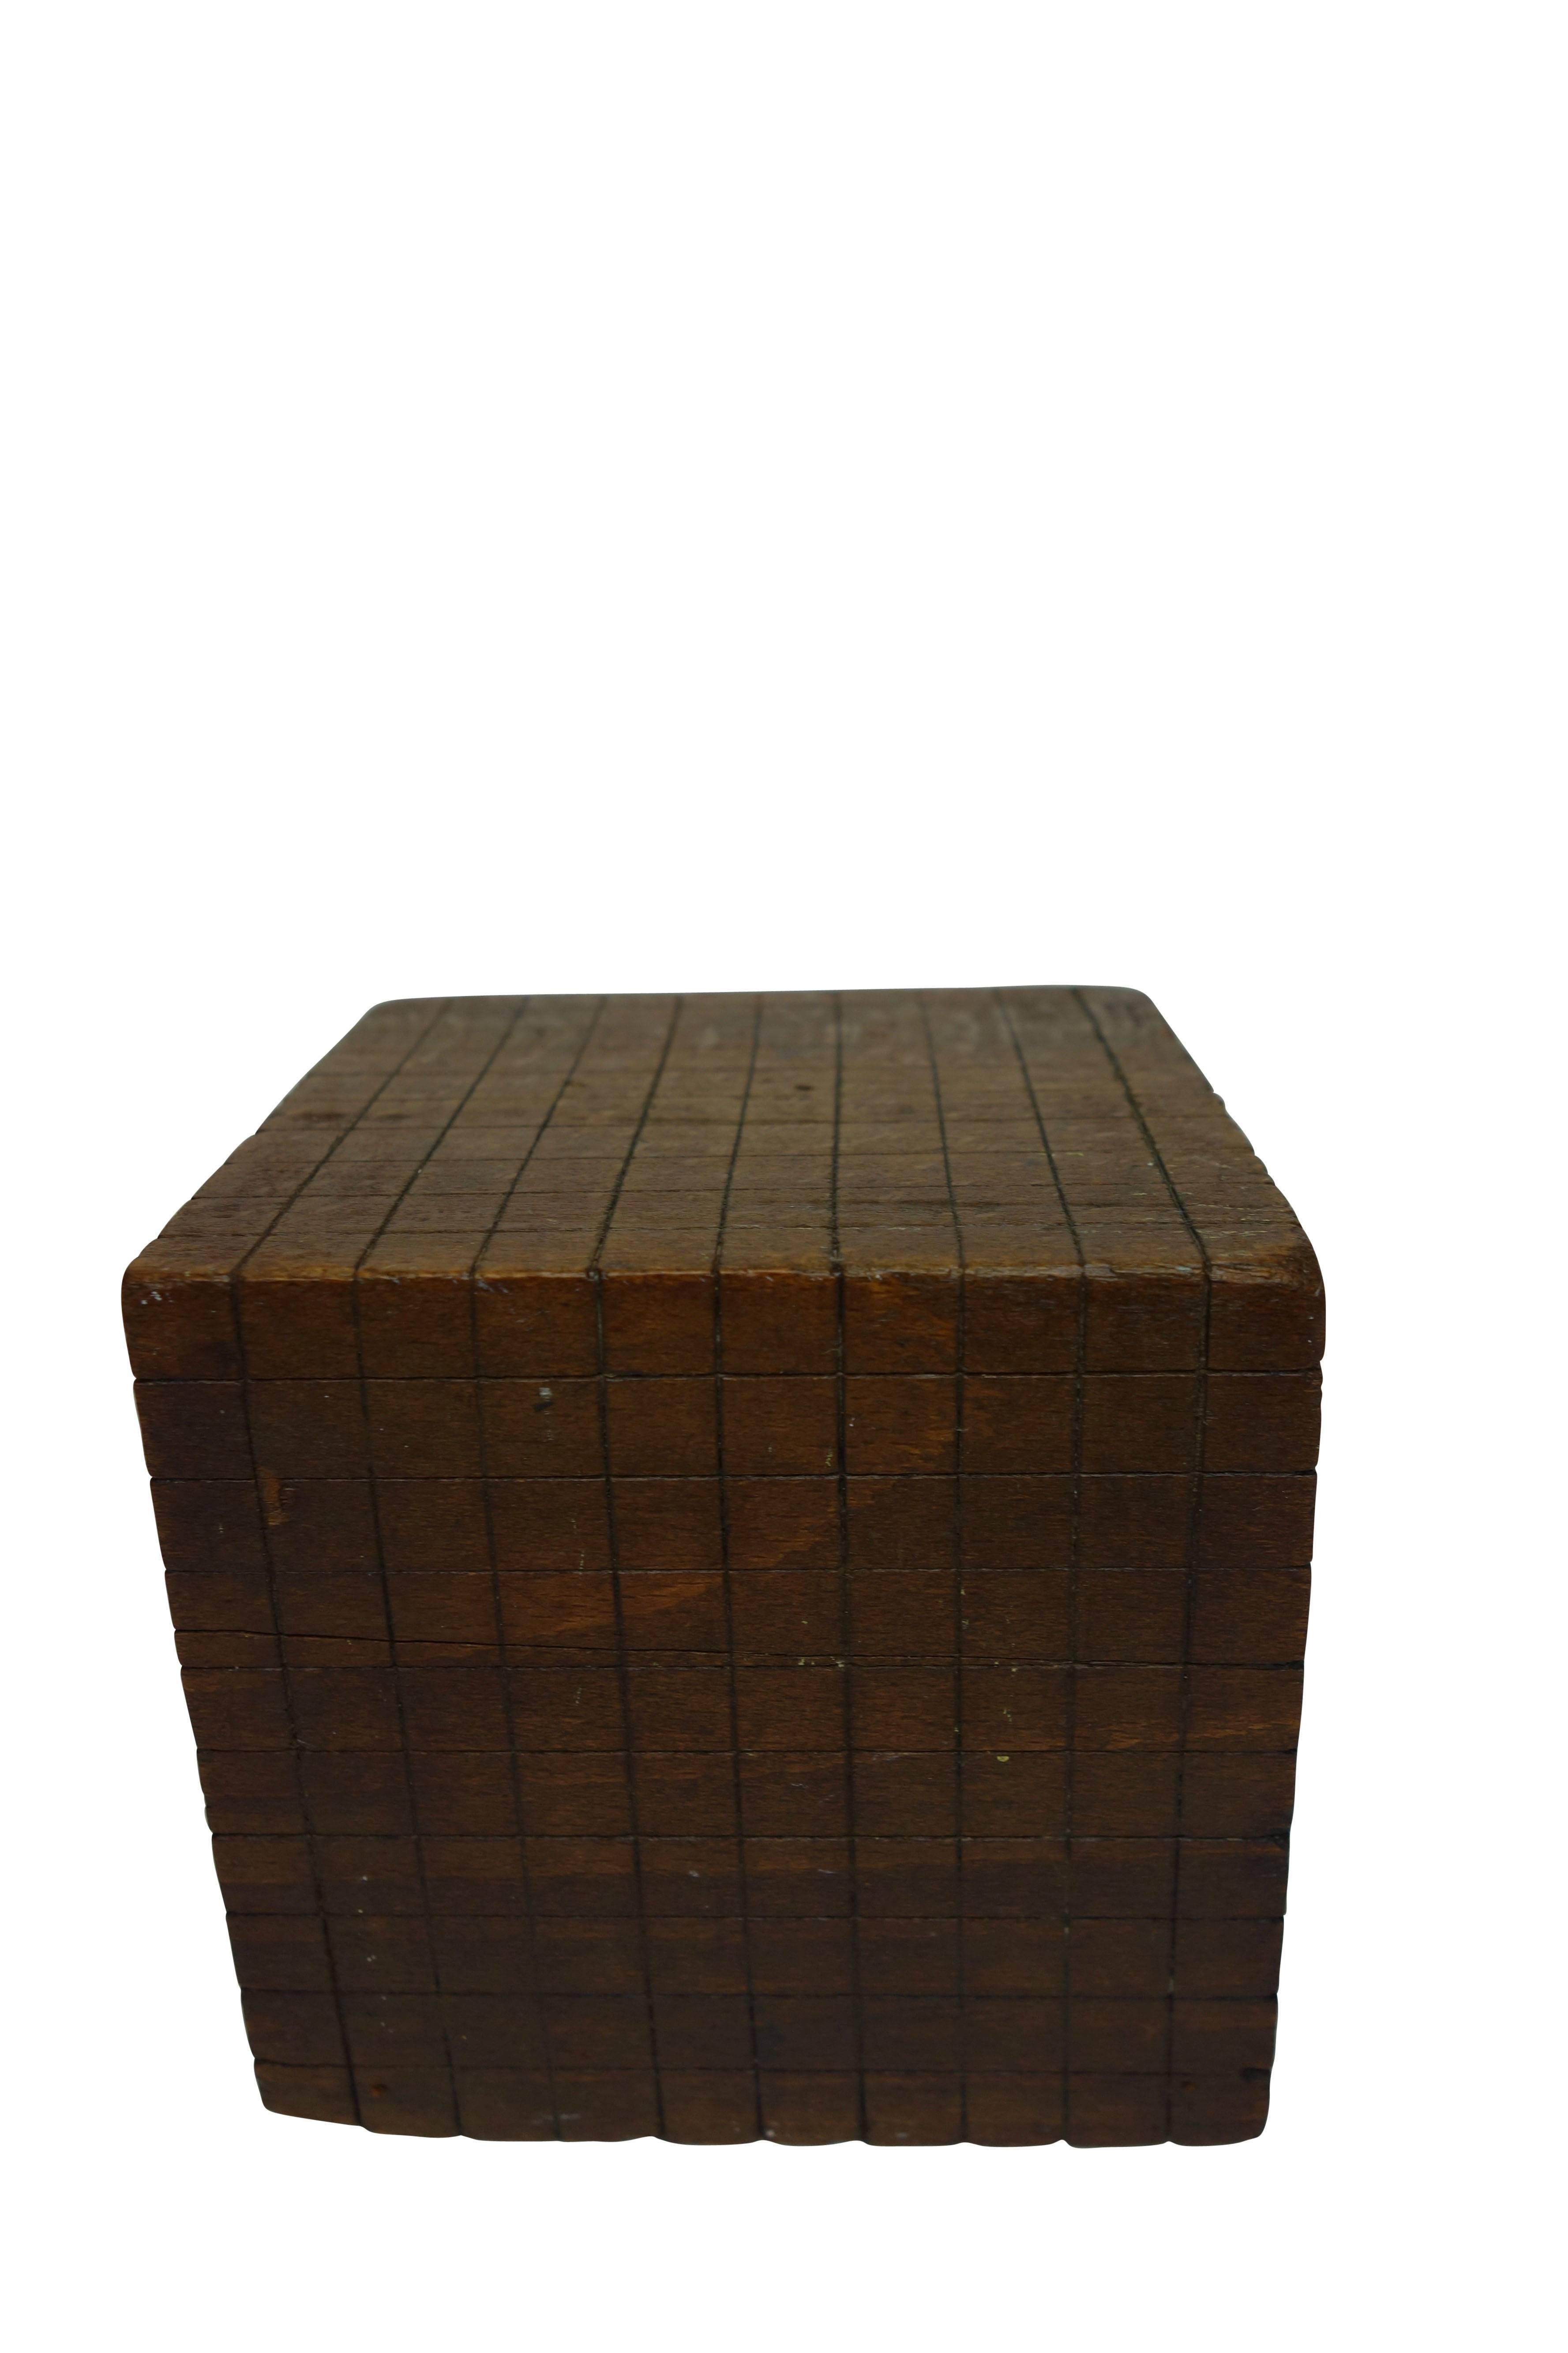 French Wood “Base Ten” Cube Educational Model